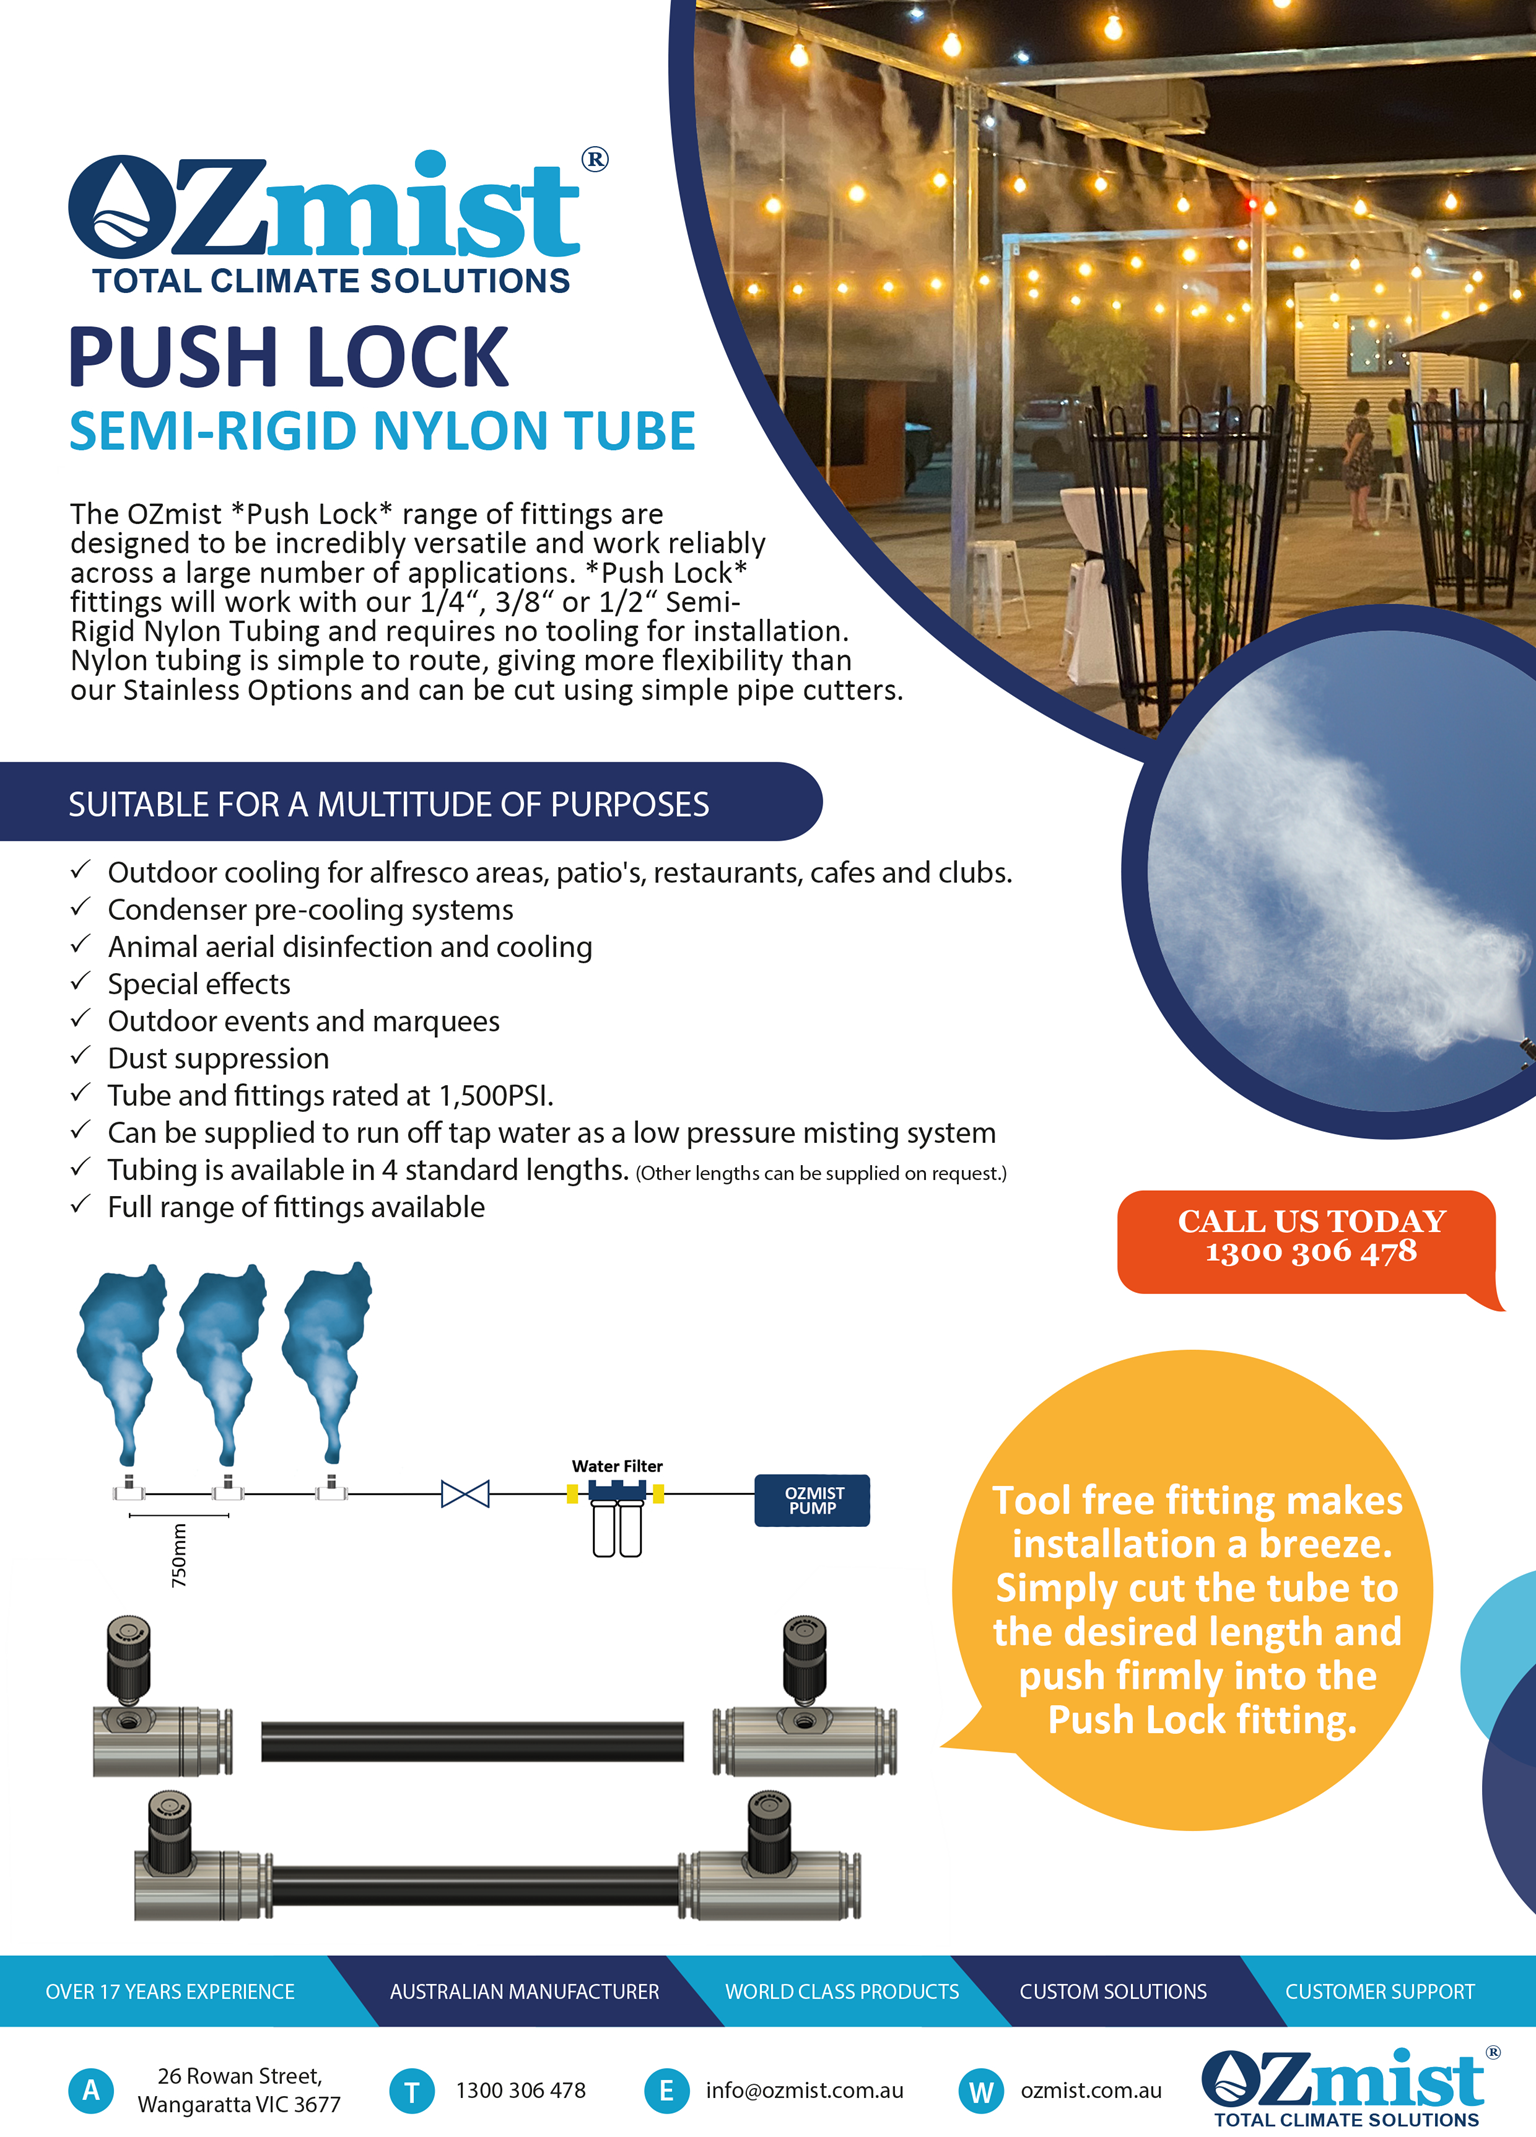 Push Lock Fittings for Semi-Rigid Nylon Tube